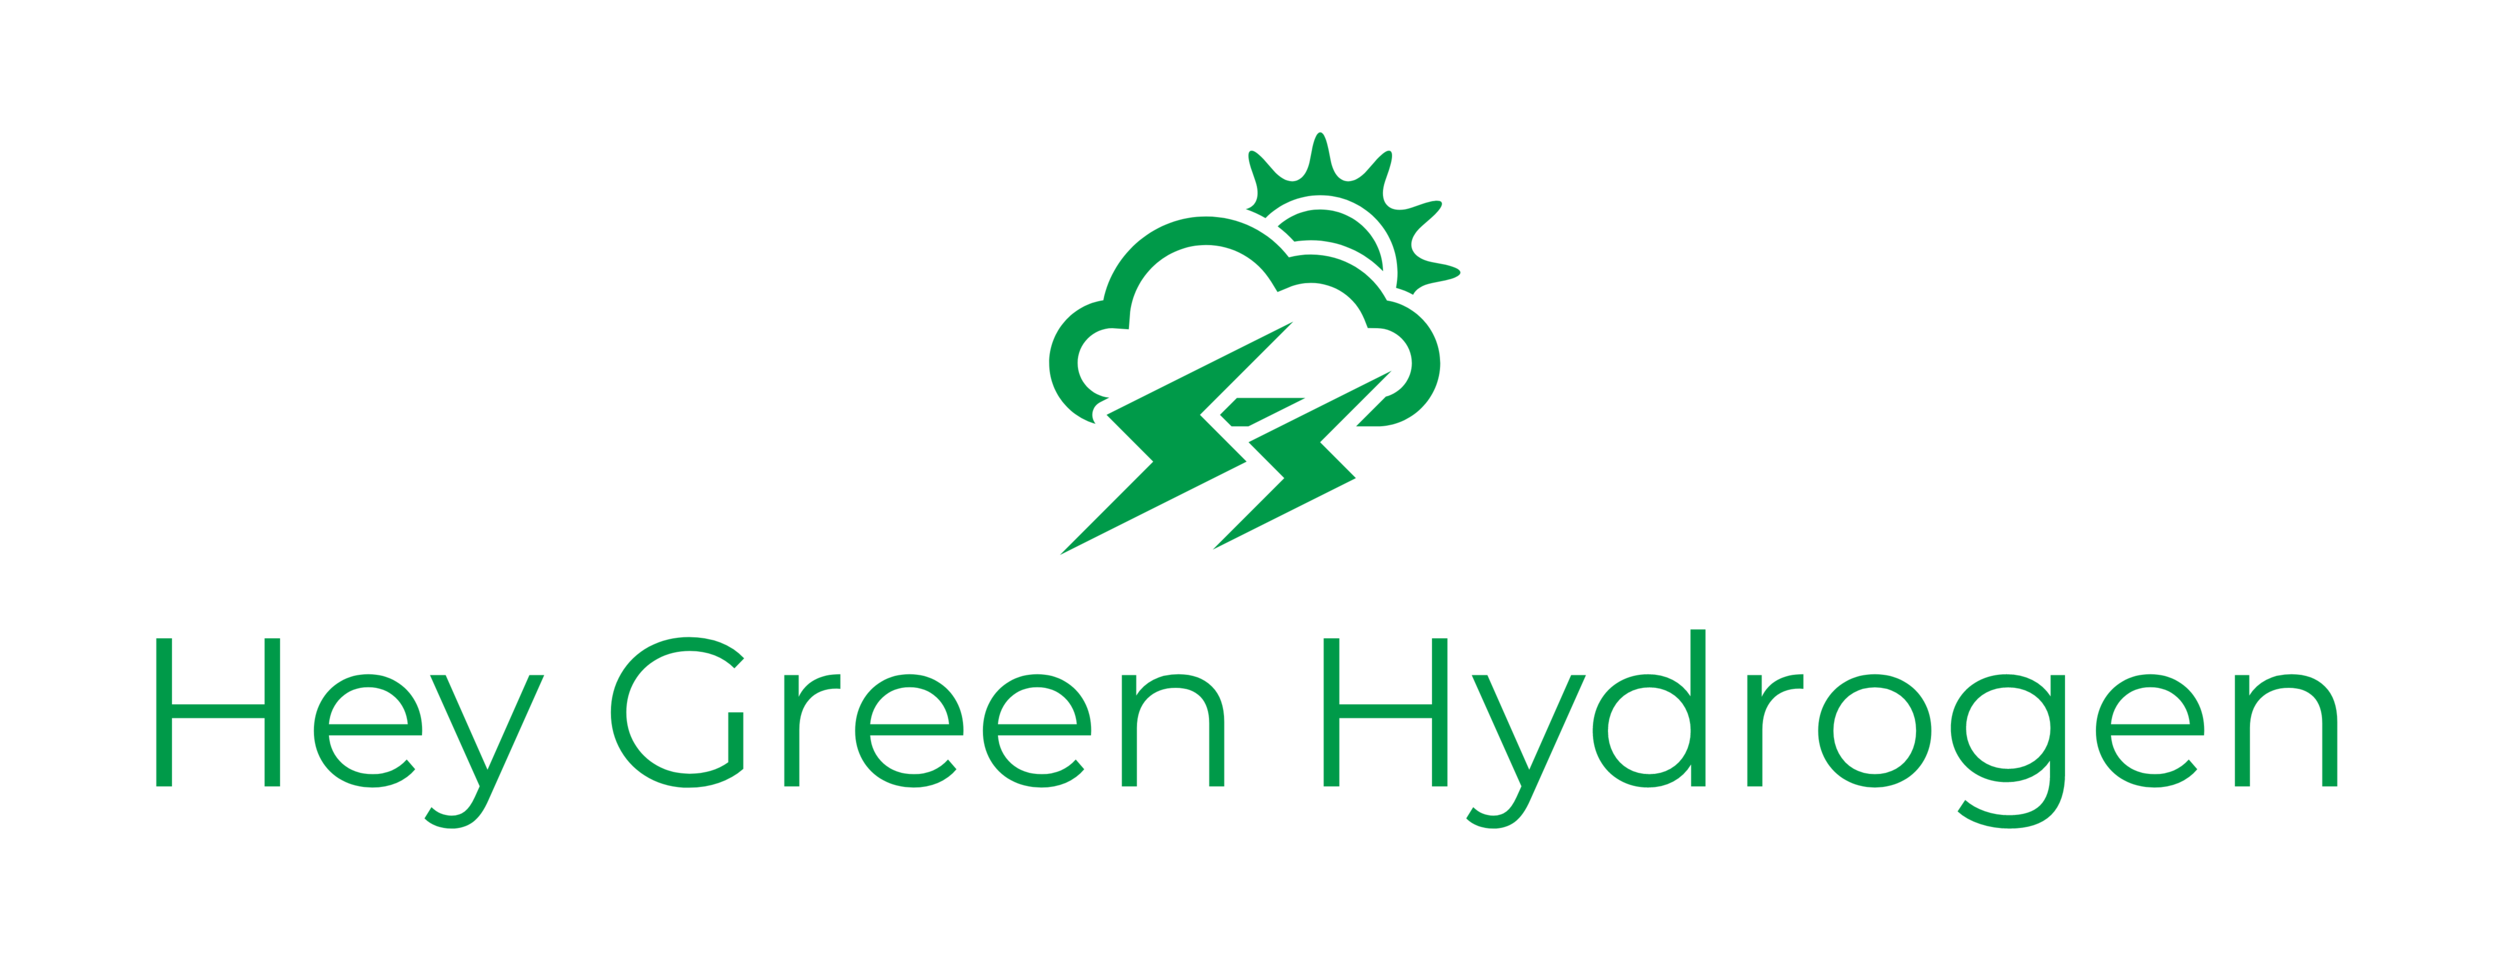 Hey Green Hydrogen